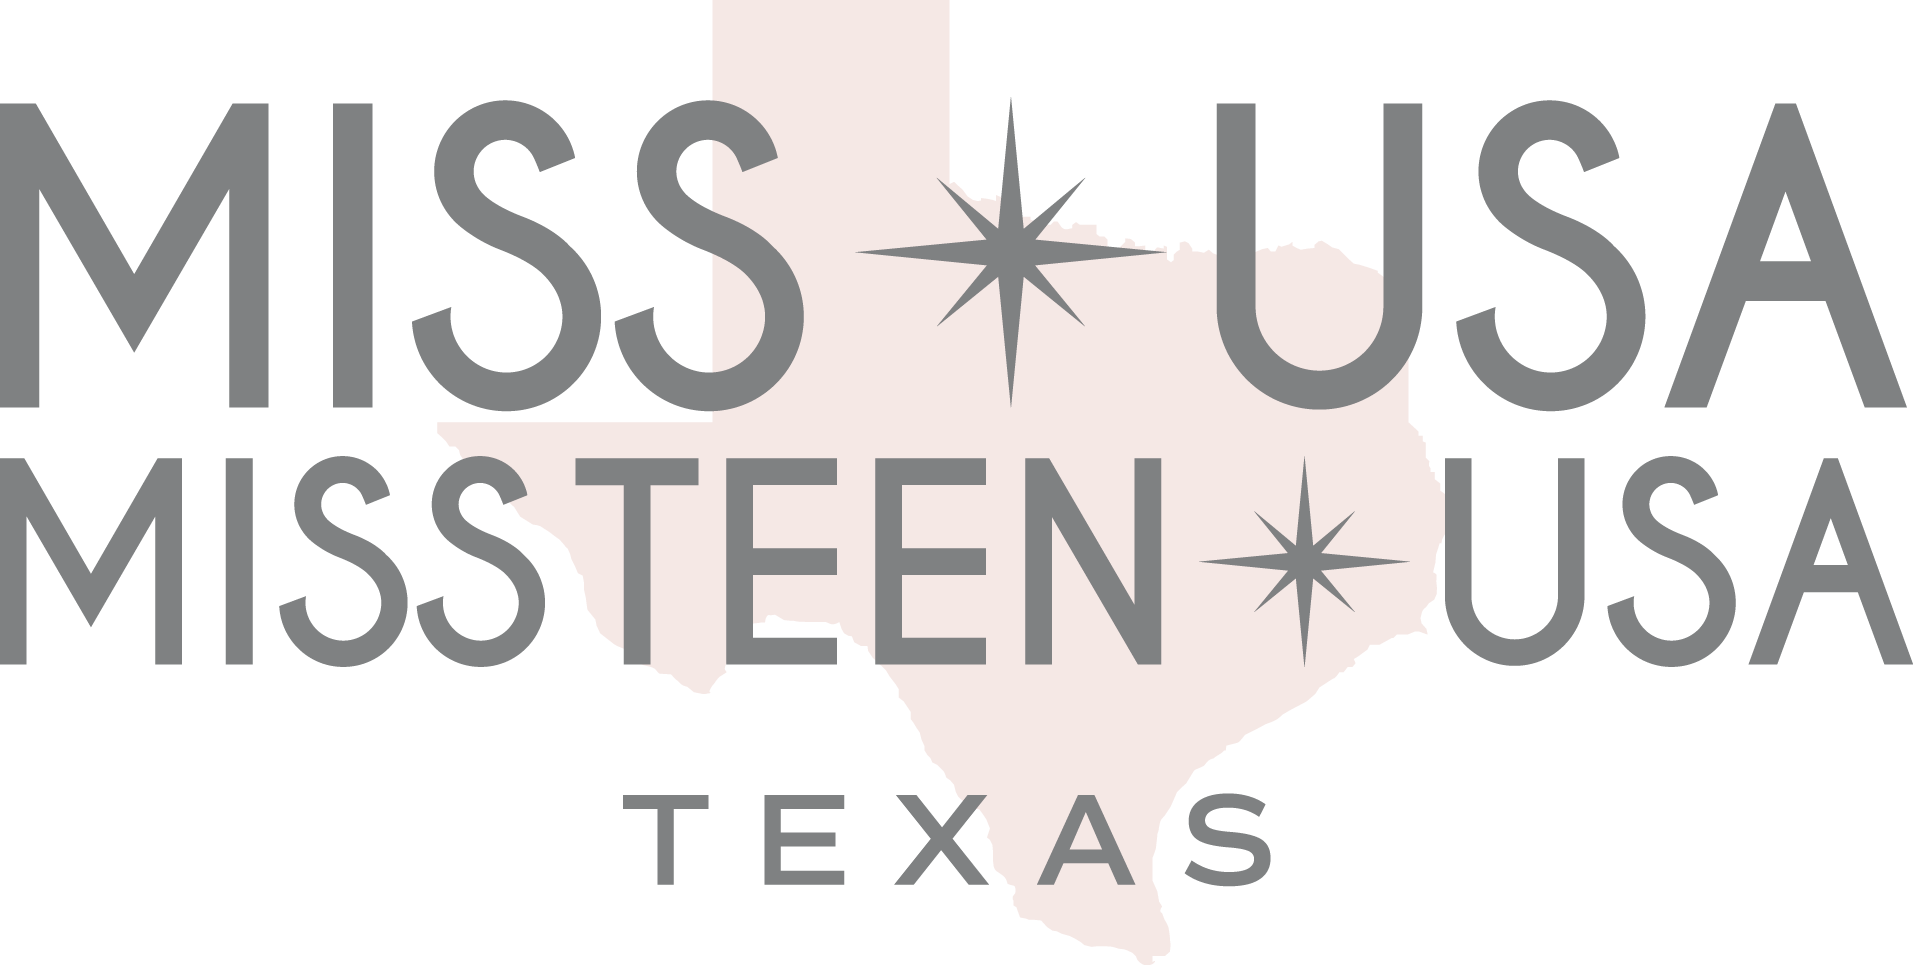 Miss Texas USA & Miss Texas Teen USA